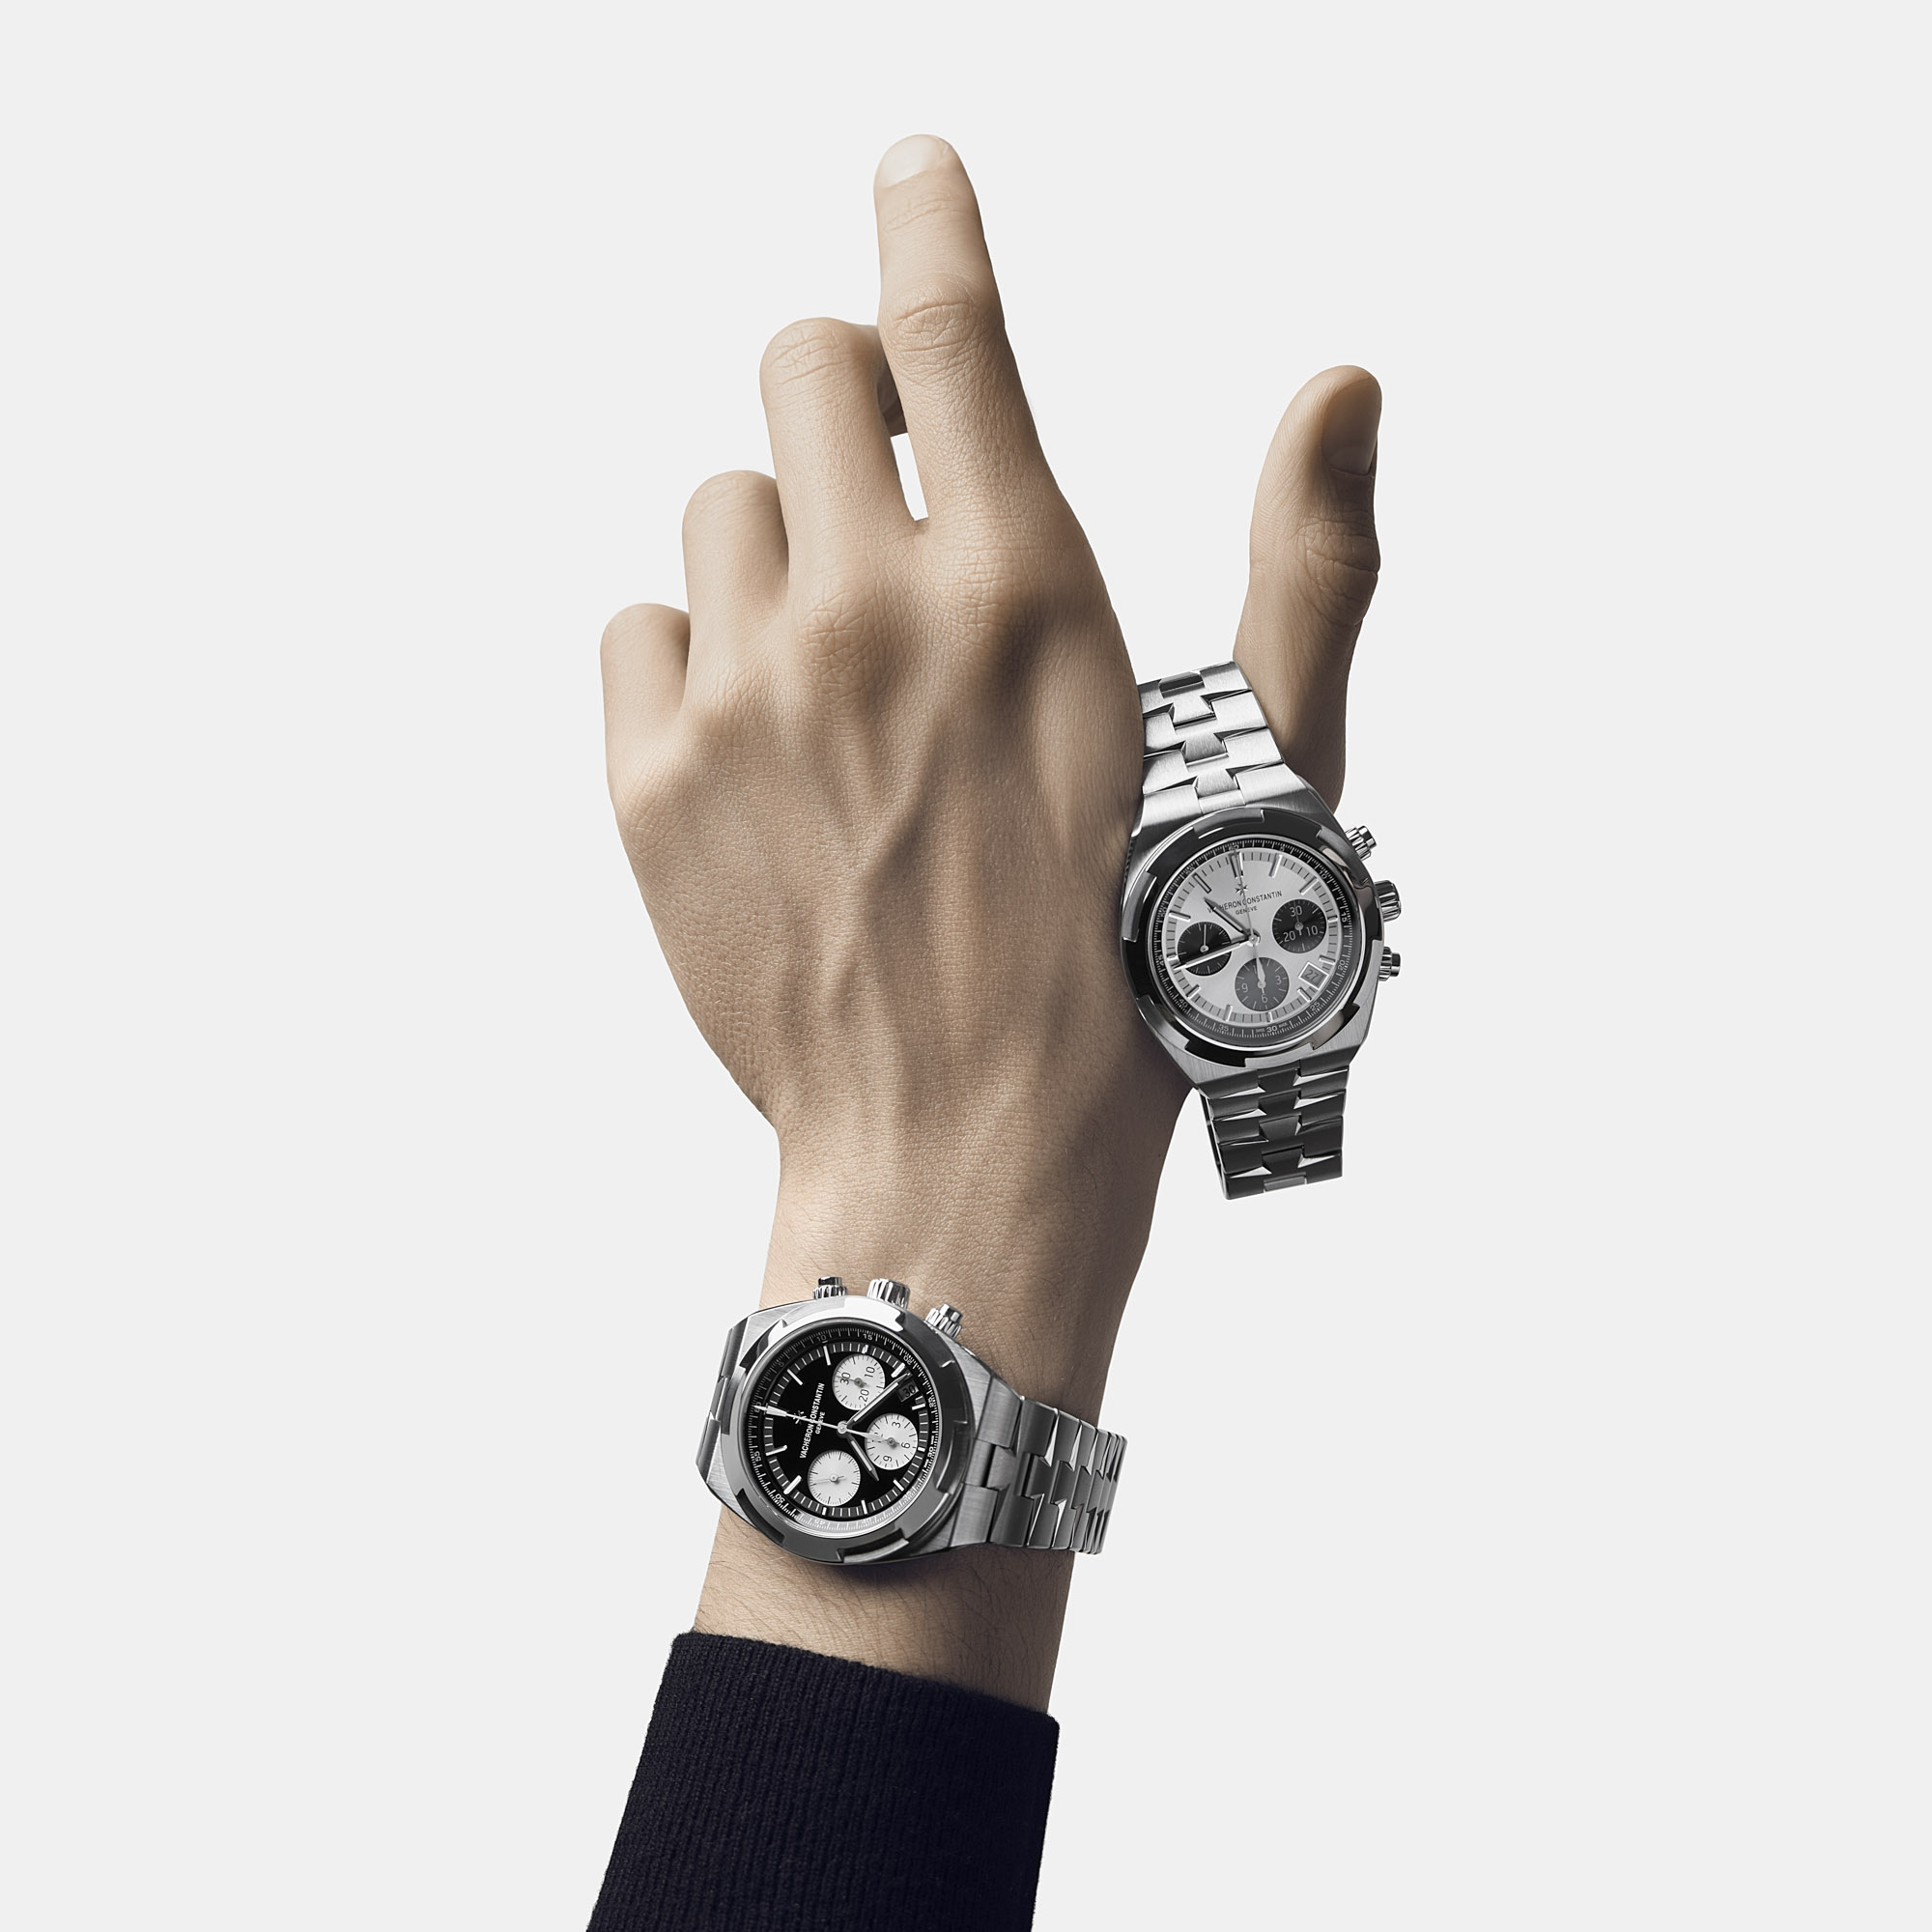 Vacheron Constantin's new panda dial watches are flippin' gorgeous